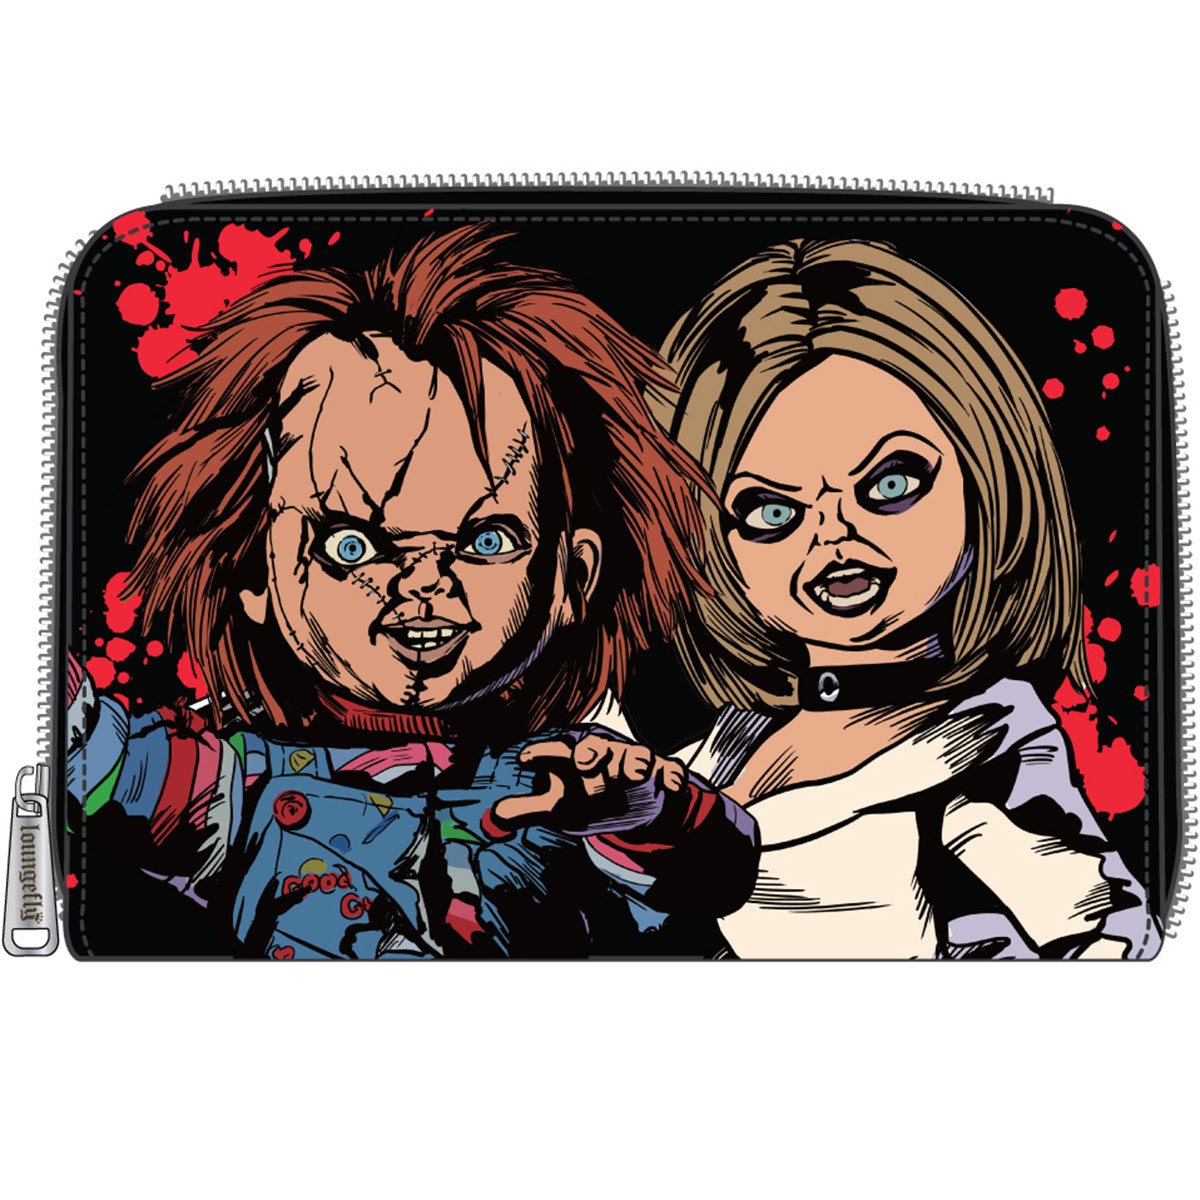 Bride of Chucky Happy Couple Tiffany and Chucky Zip-Around Wallet.